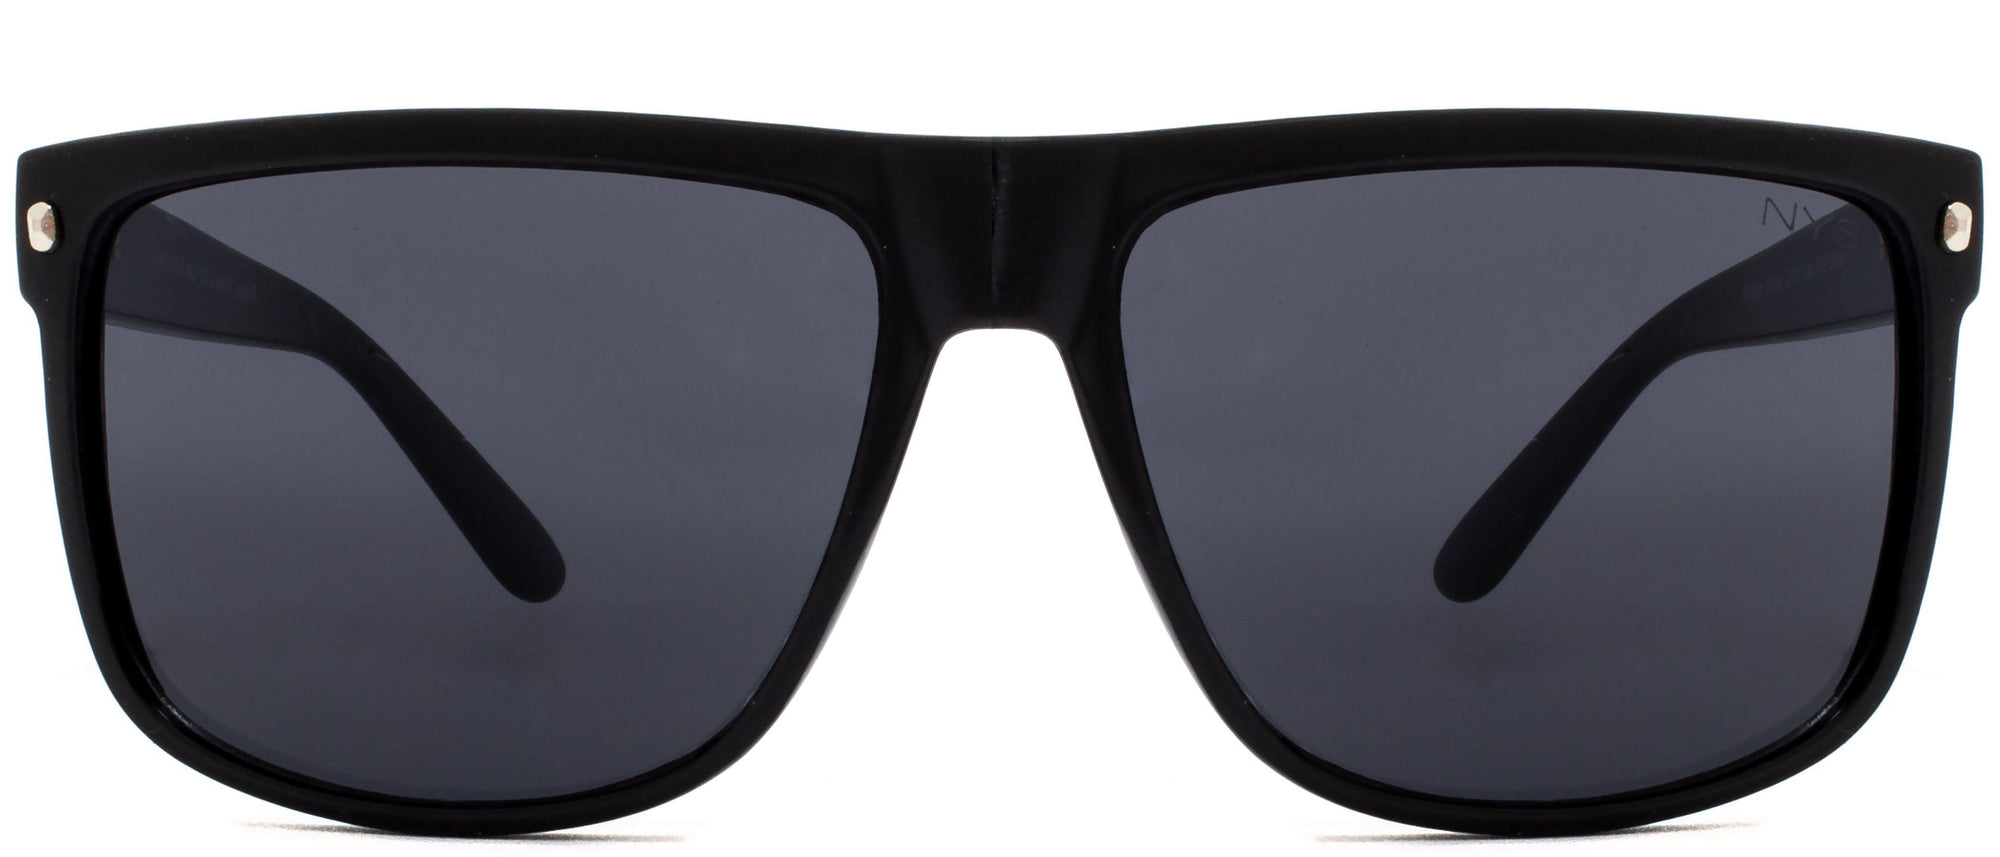 Bridge Polarized - Sunglasses NYS Collection Eyewear Black/Black